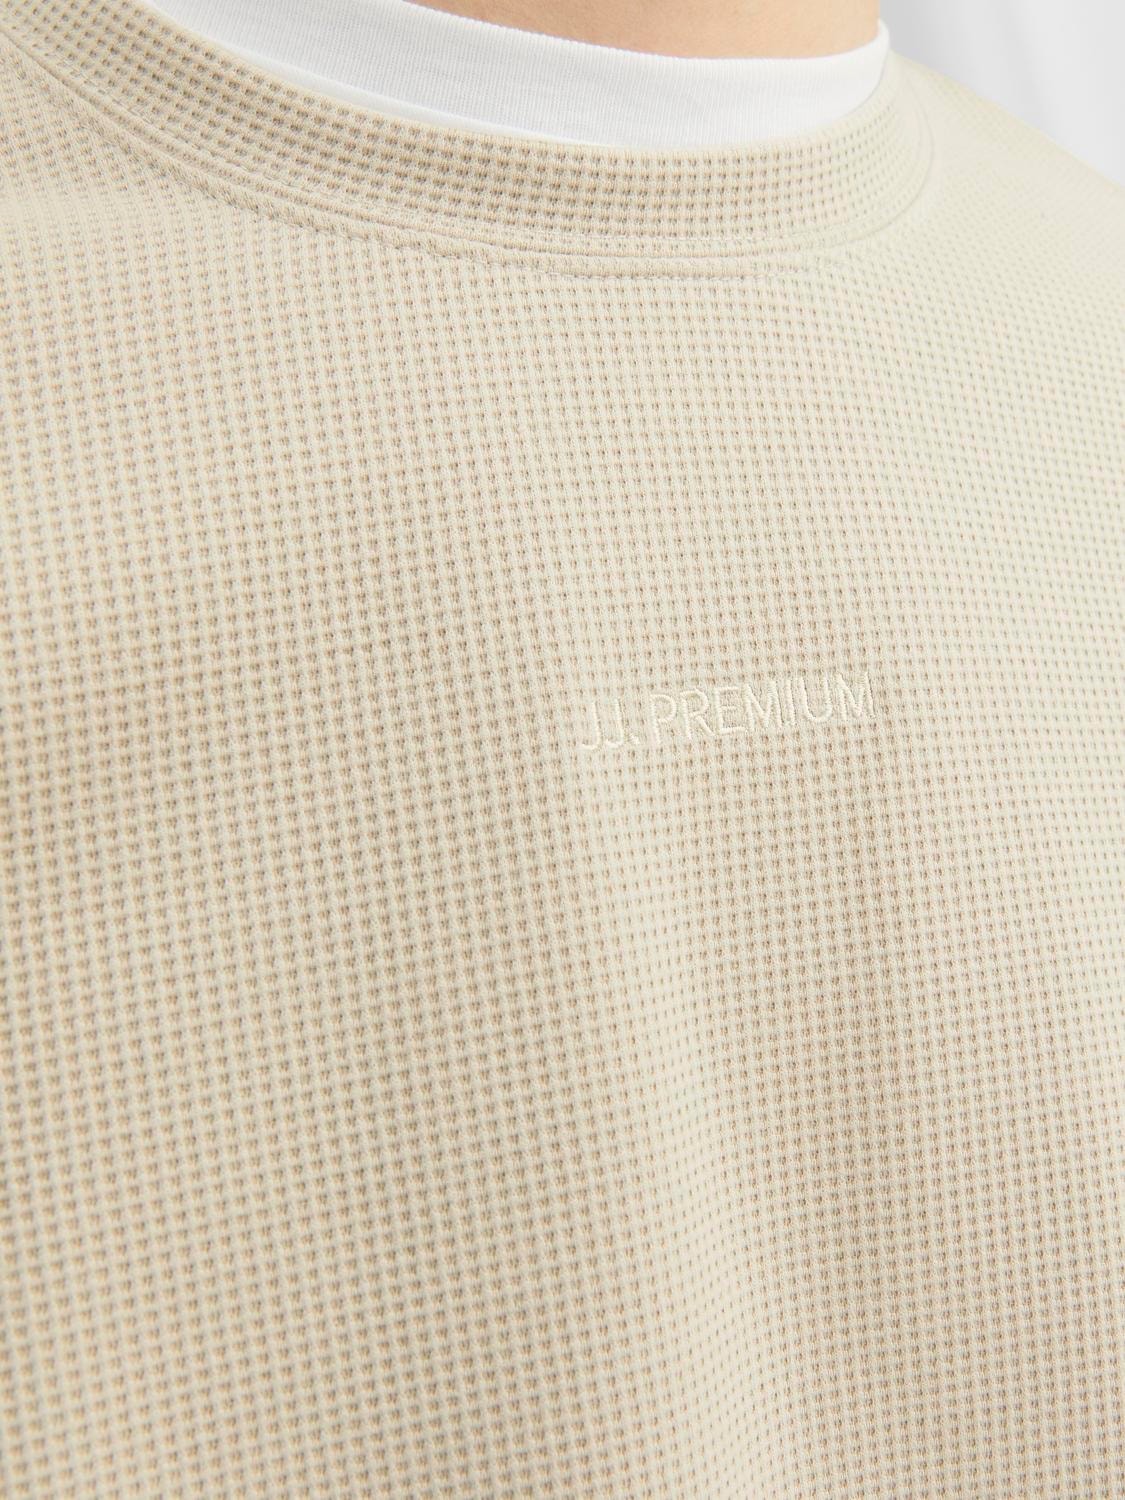 Jack & Jones Plain Crewn Neck Sweatshirt -Pure Cashmere - 12241205